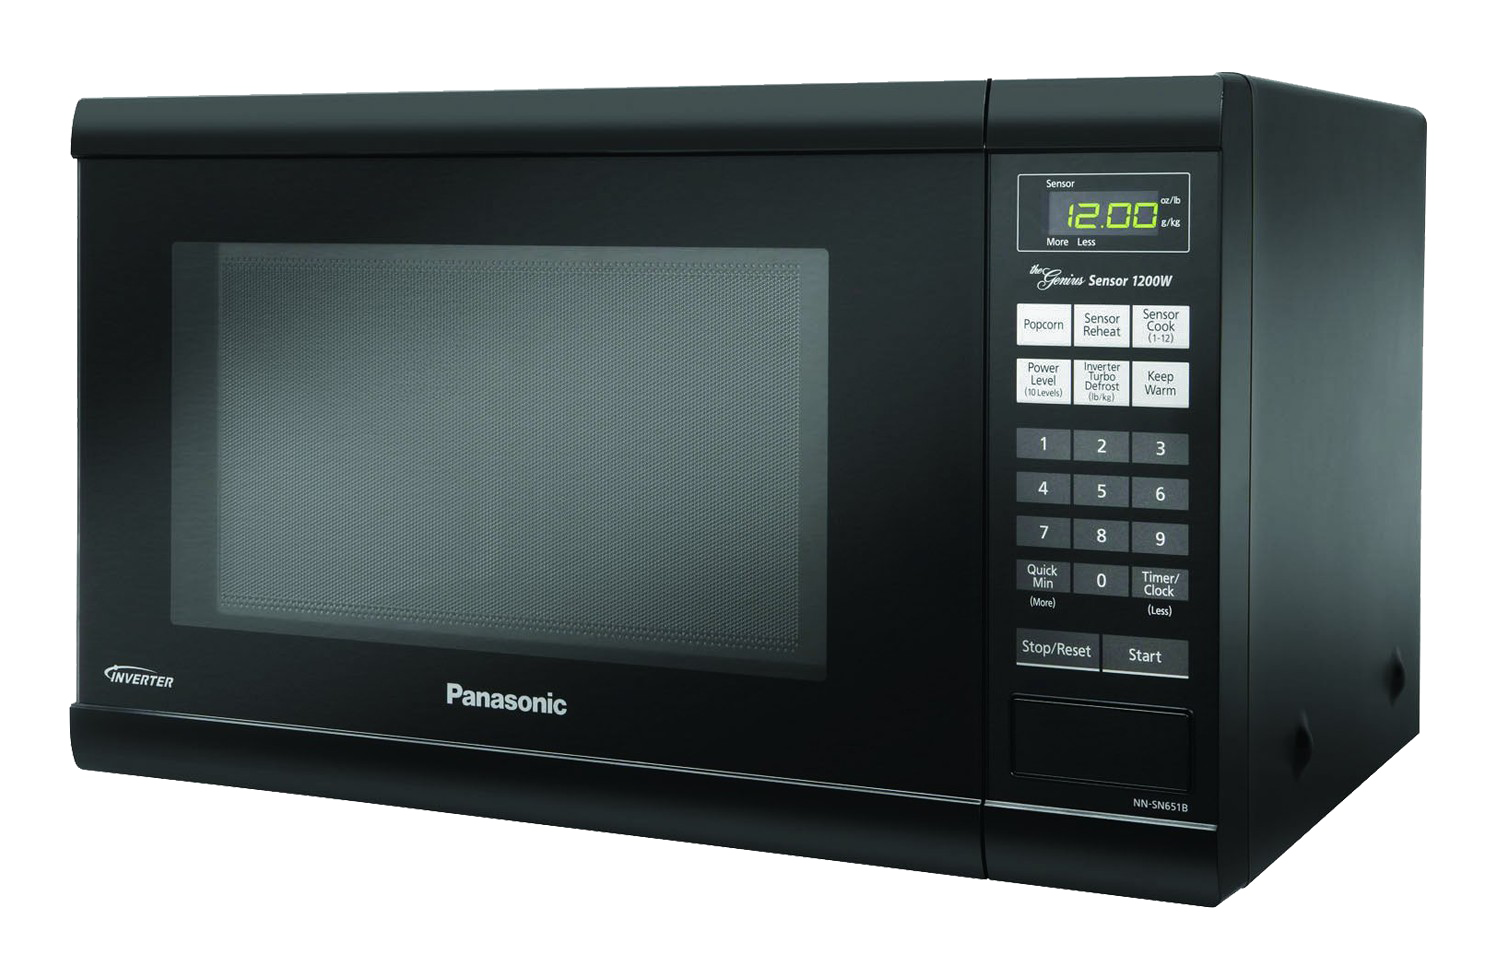 Oven microwave Panasonic Transparan